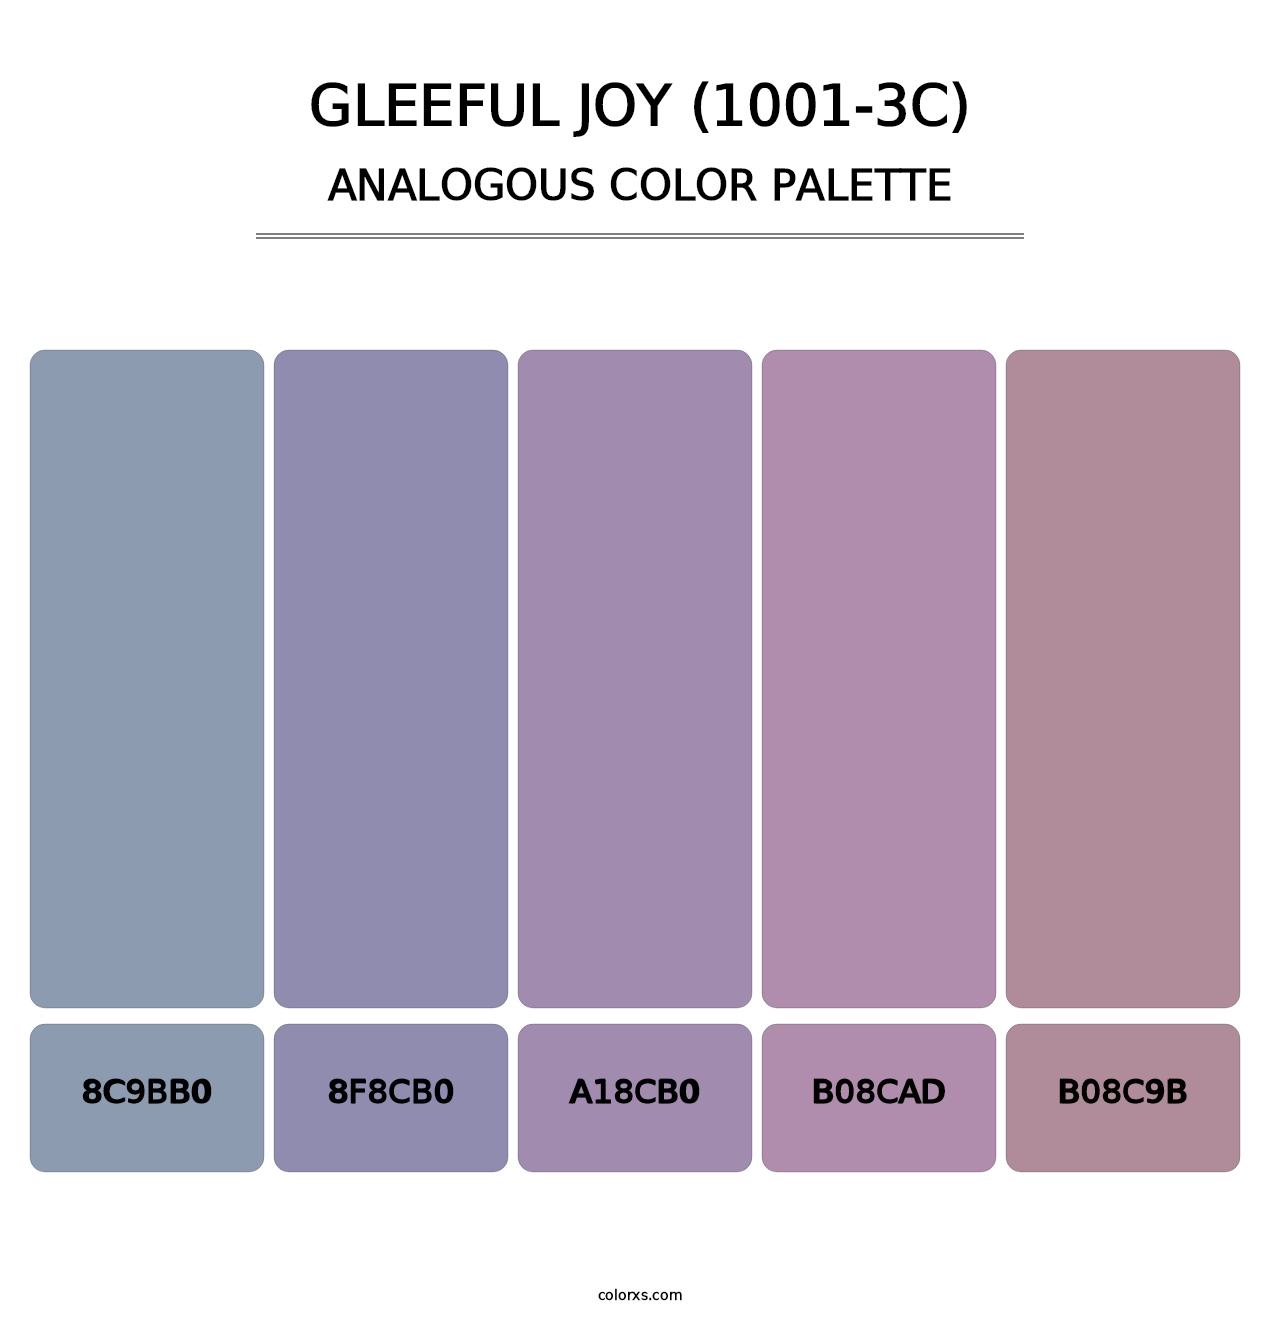 Gleeful Joy (1001-3C) - Analogous Color Palette